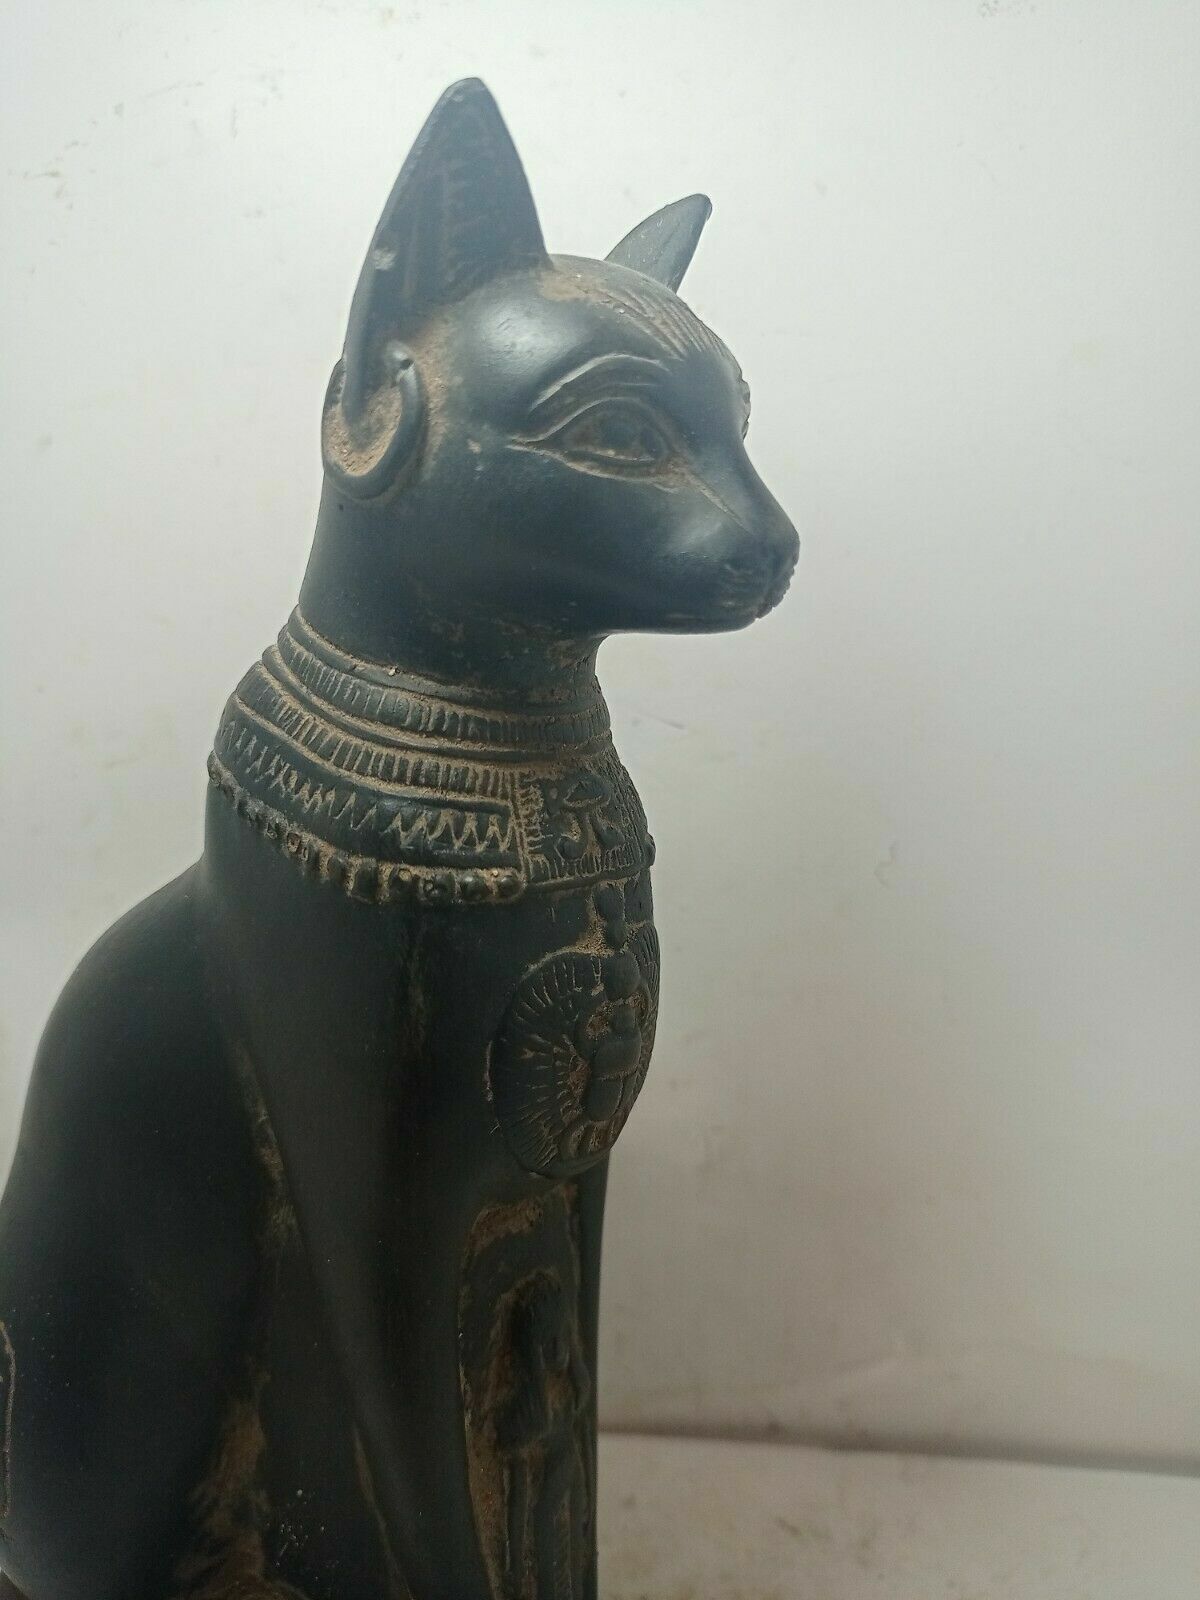 RARE ANTIQUE ANCIENT EGYPTIAN Statue Goddess Bastet Cat Isis Scarab 1740 Bc